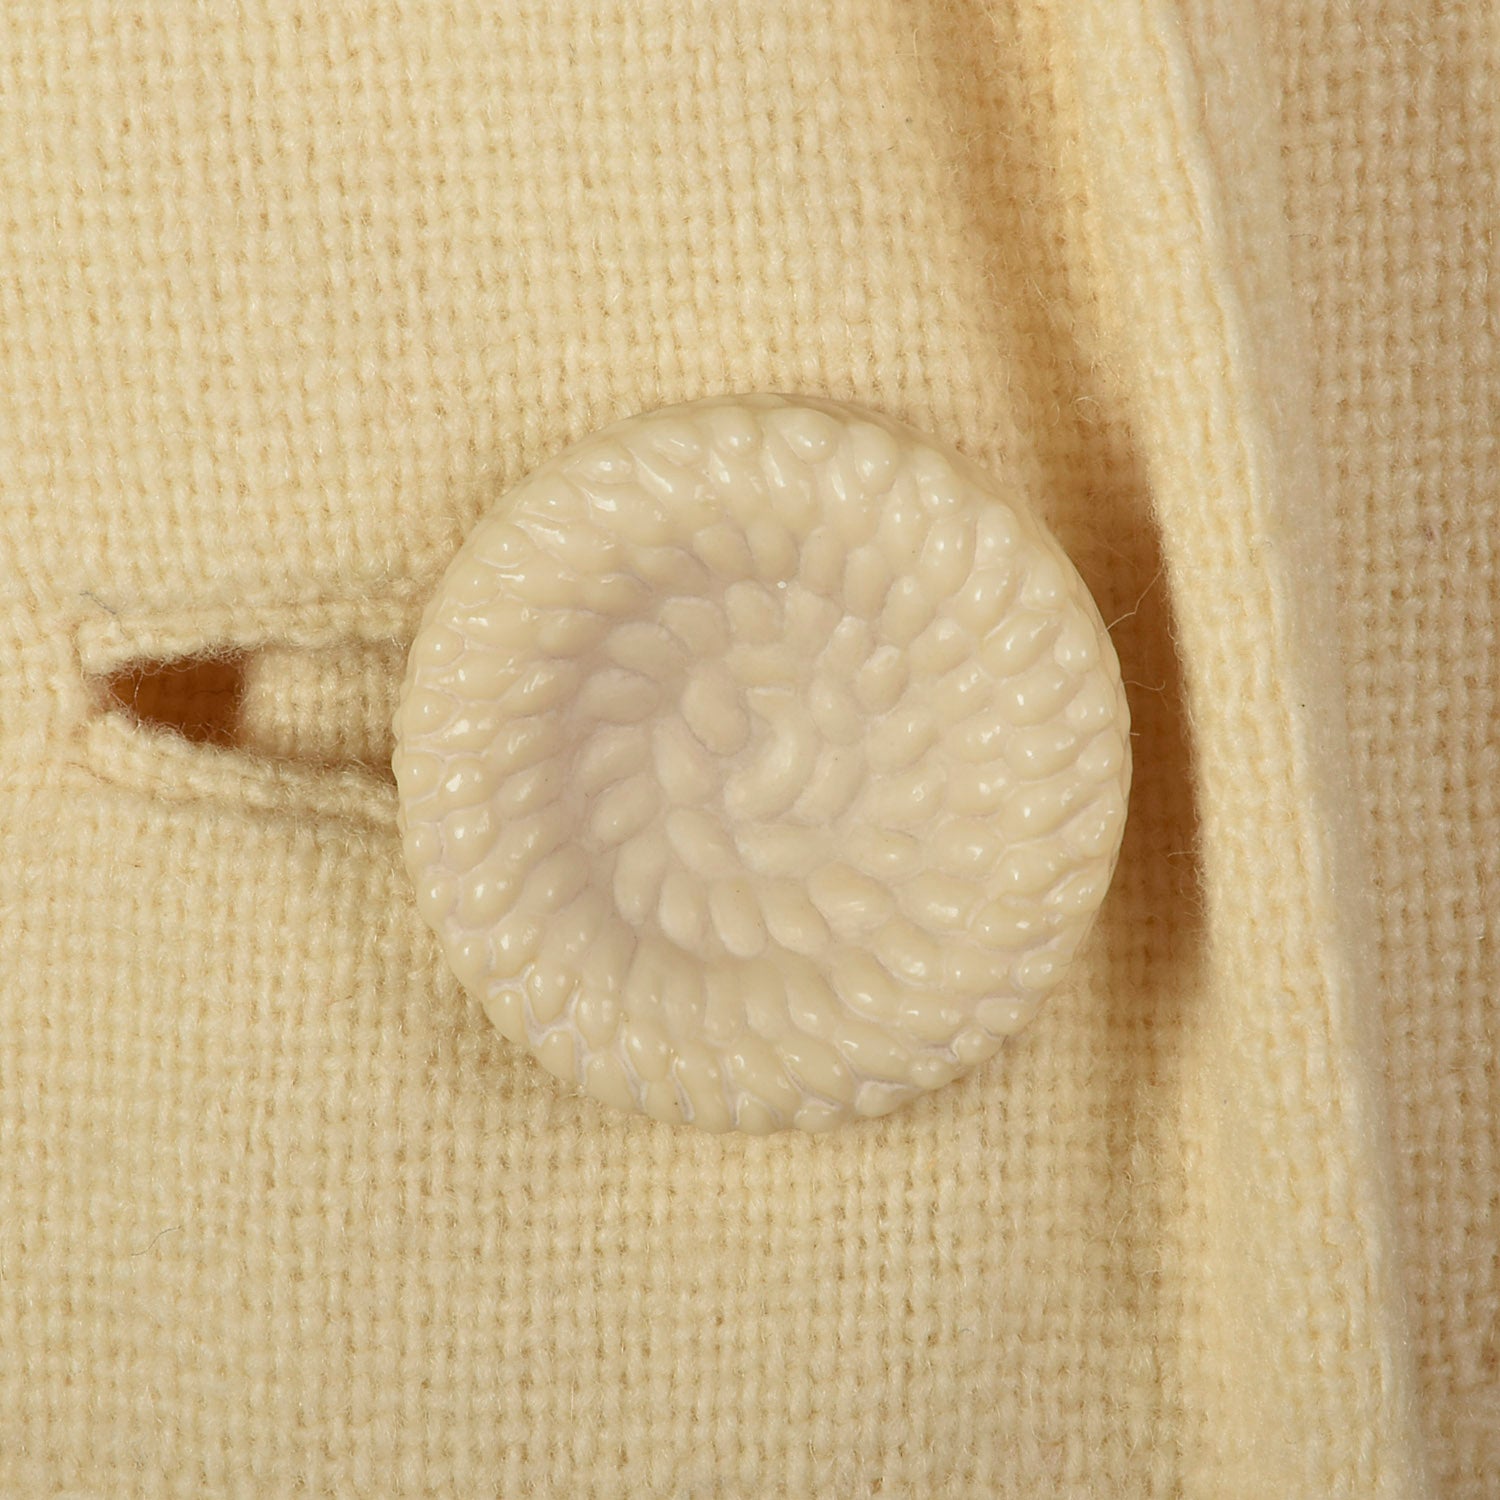 Small 1950s Cream Winter Coat